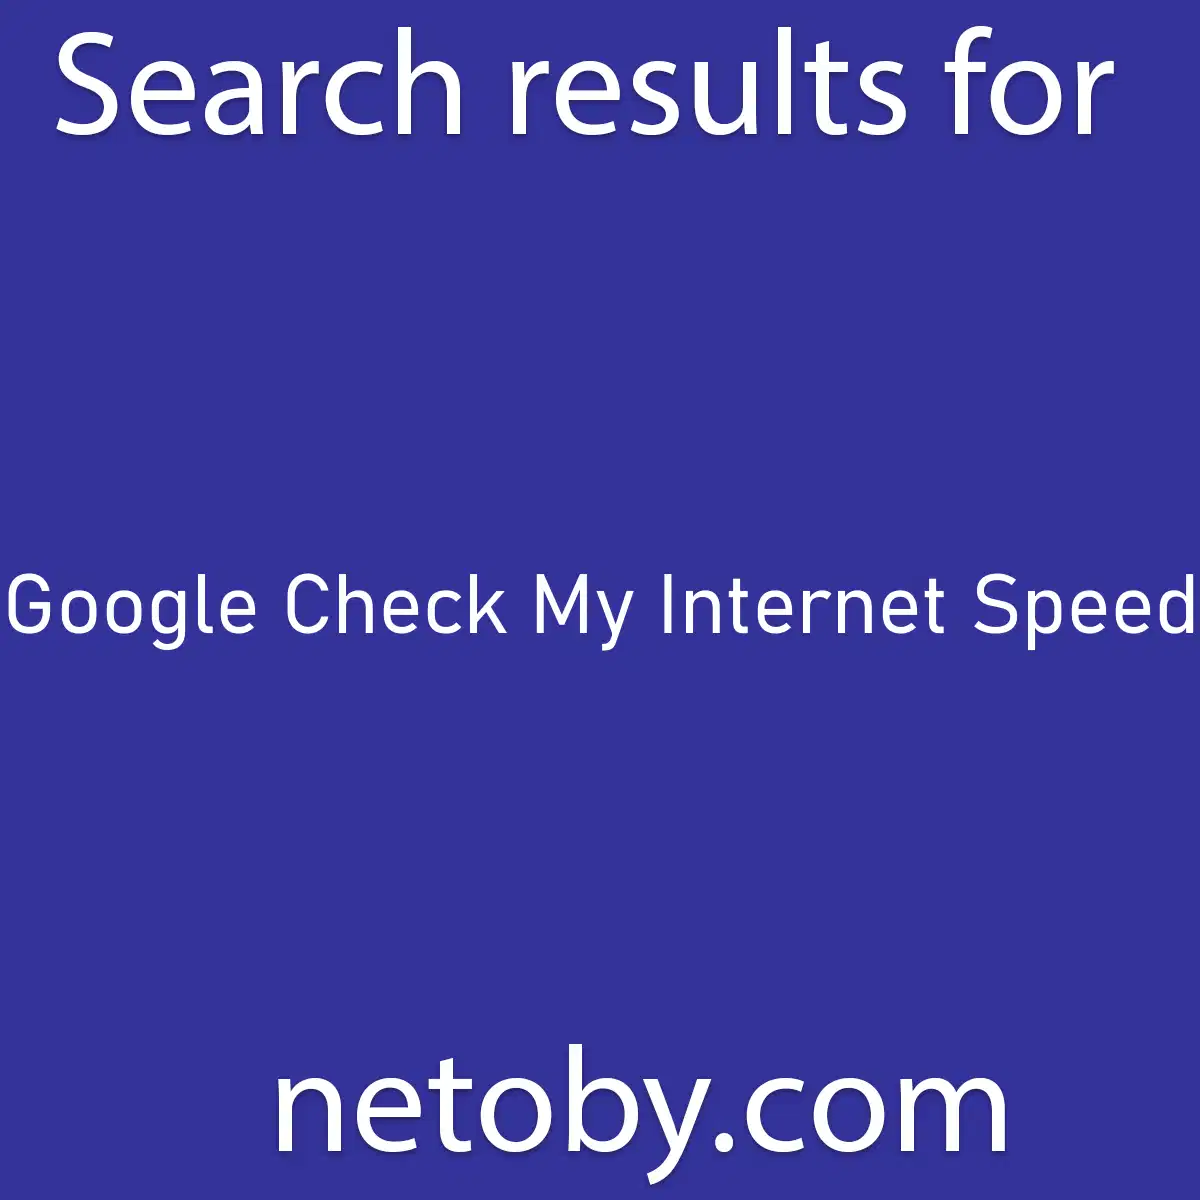 ﻿Google Check My Internet Speed